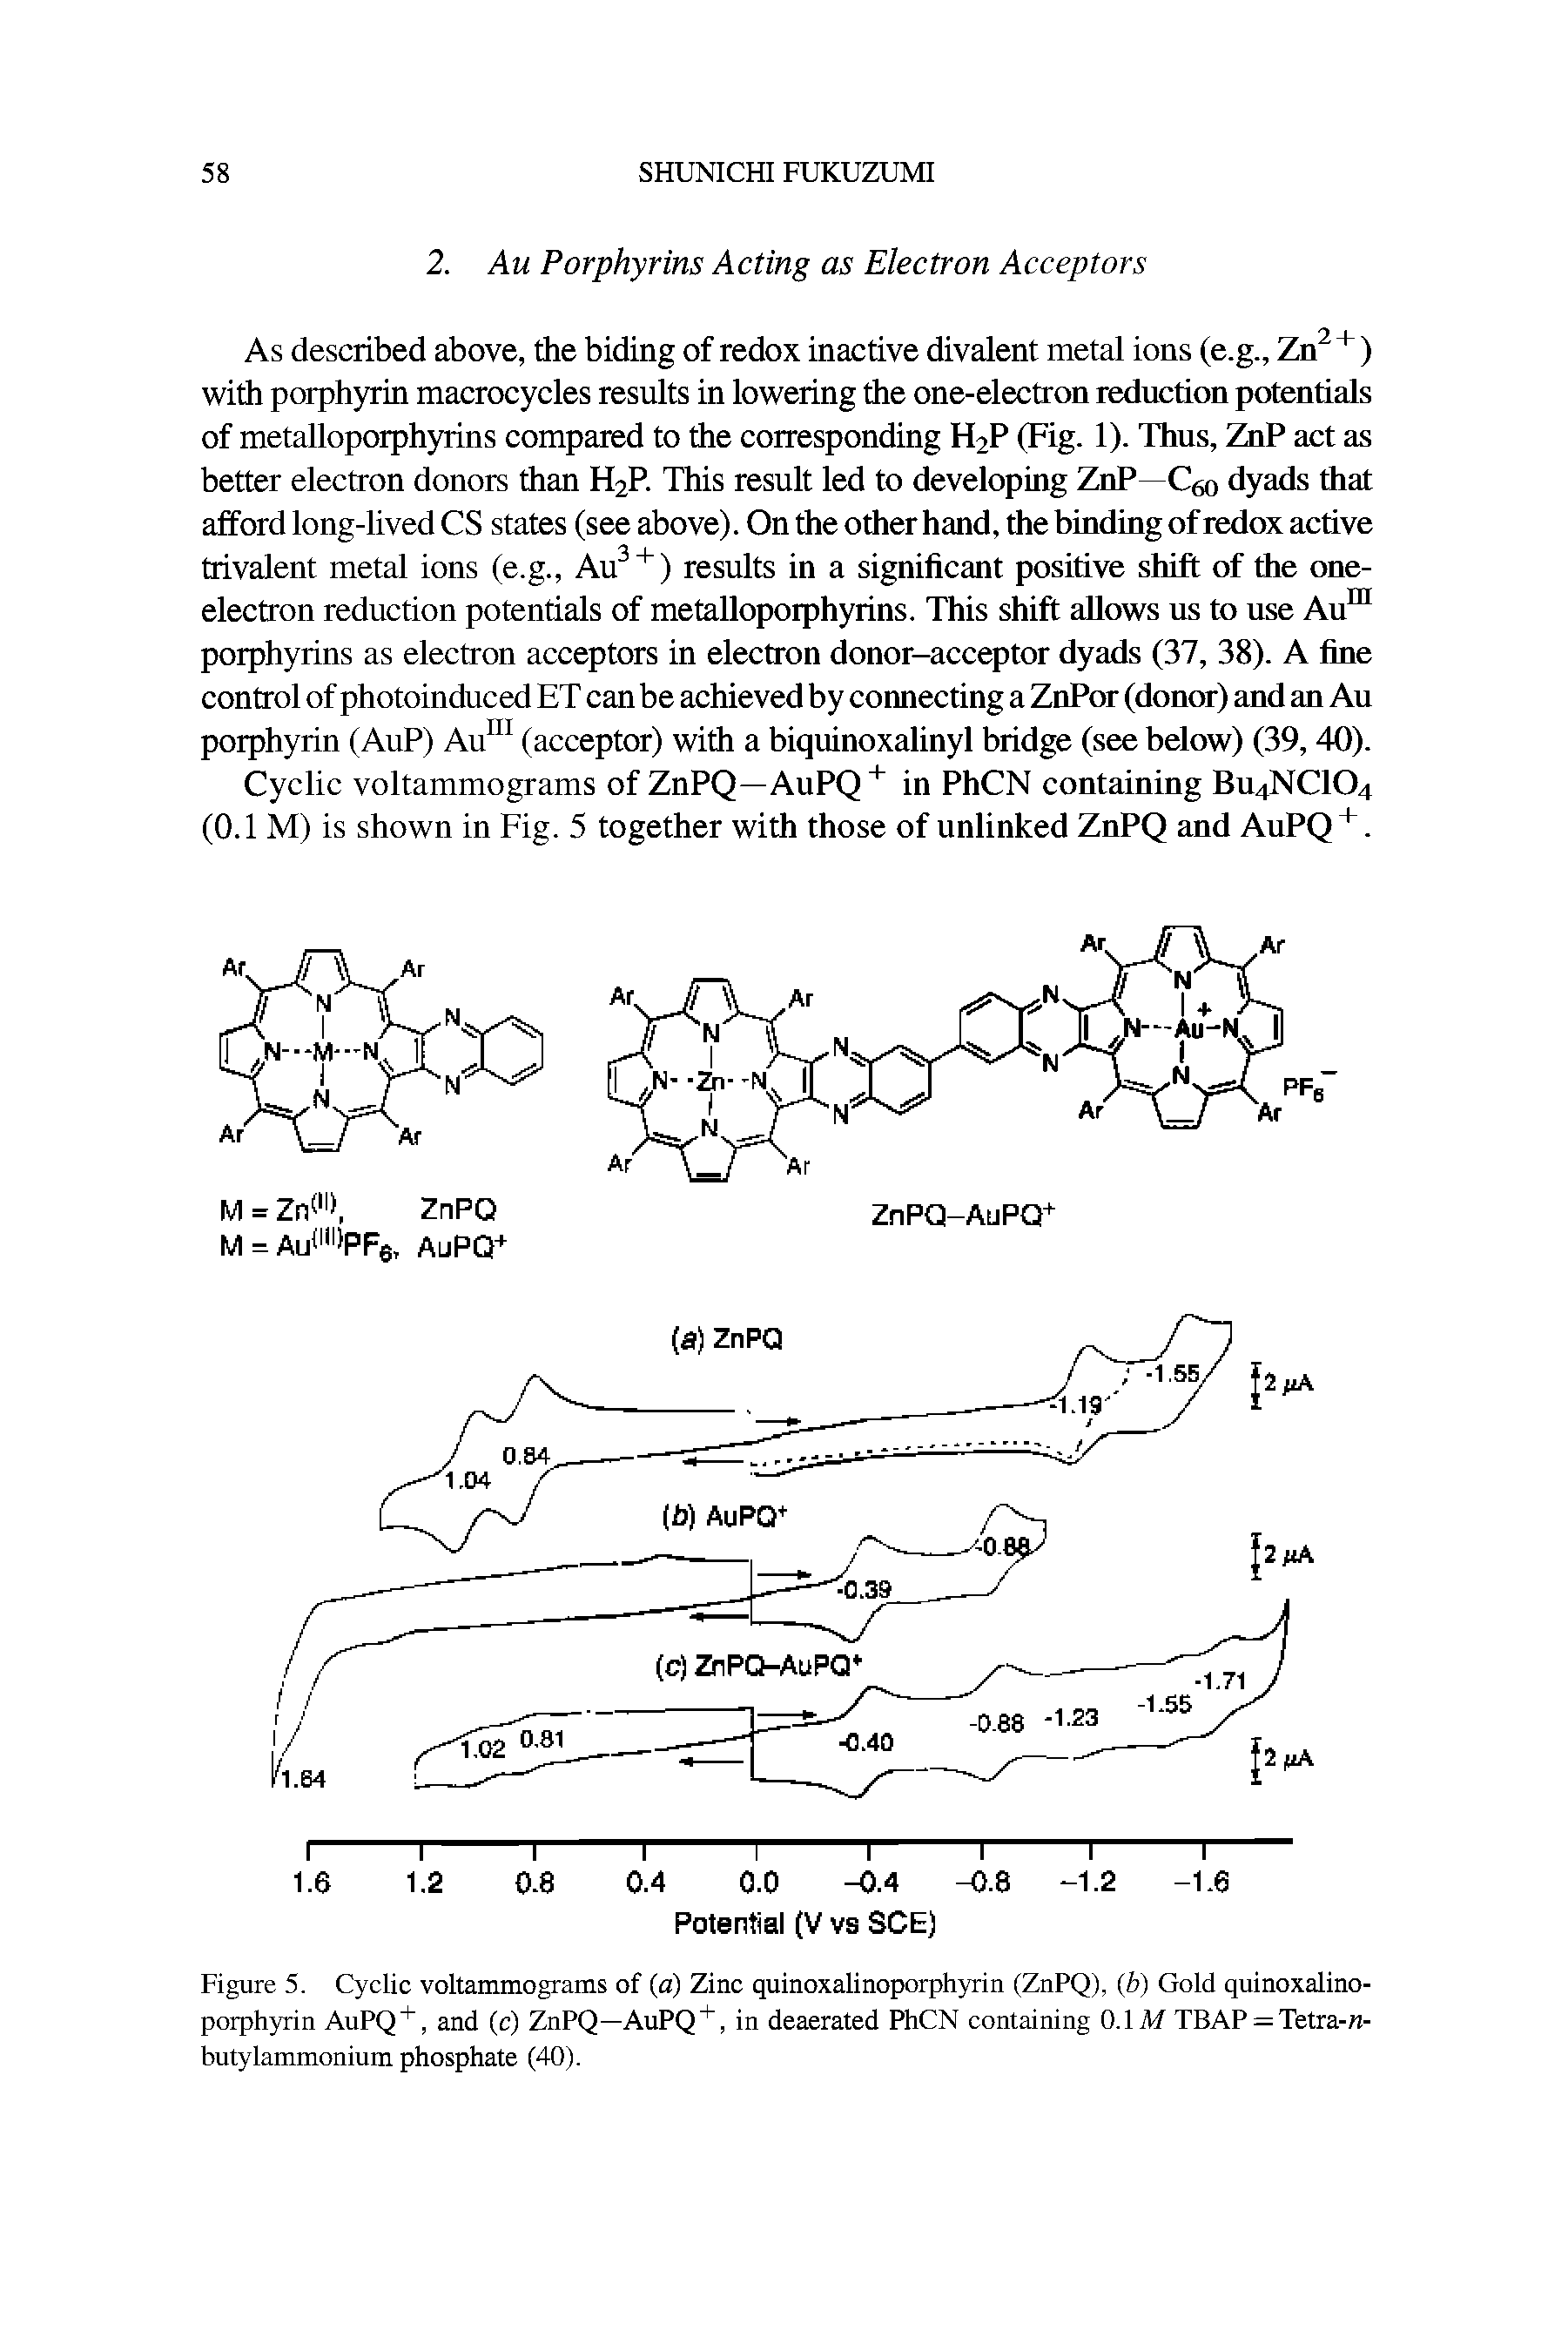 Figure 5. Cyclic voltammograms of (a) Zinc quinoxalinoporphyrin (ZnPQ), ib) Gold quinoxalino-porphyrin AuPQ, and (c) ZnPQ—AuPQ in deaerated PhCN containing O.IM TBAP = Tetra- -...